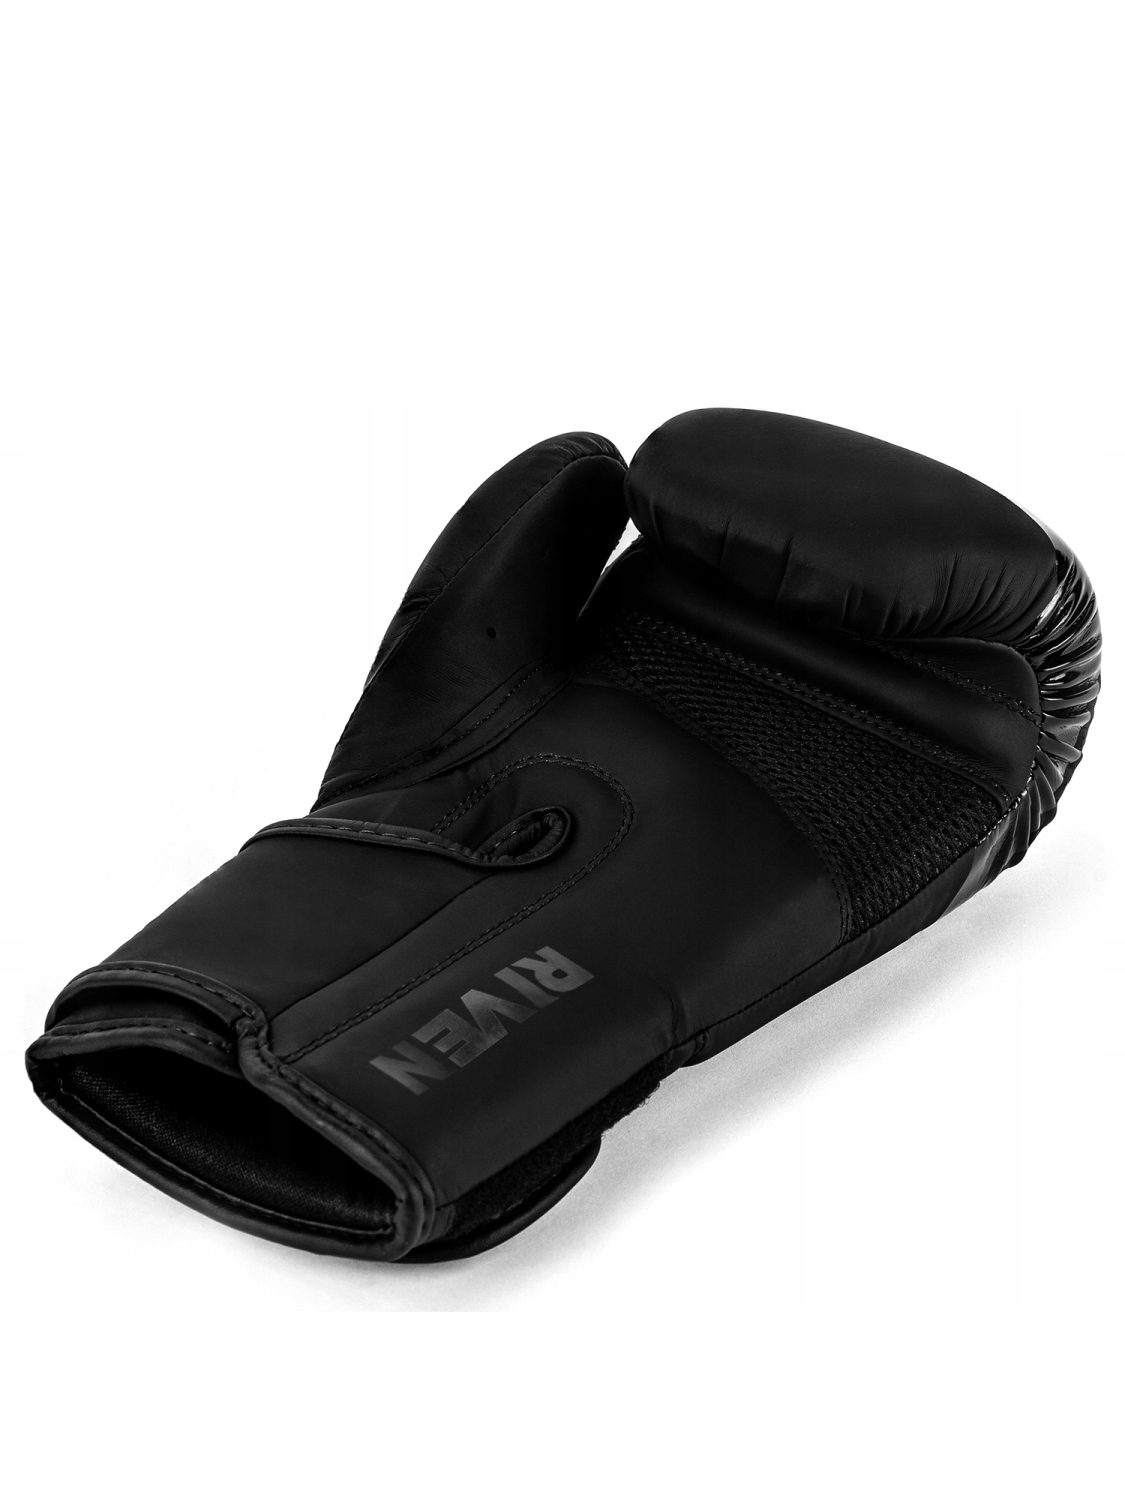 Оверлорд боксерские перчатки Ривен 16 унций размер 16 унций